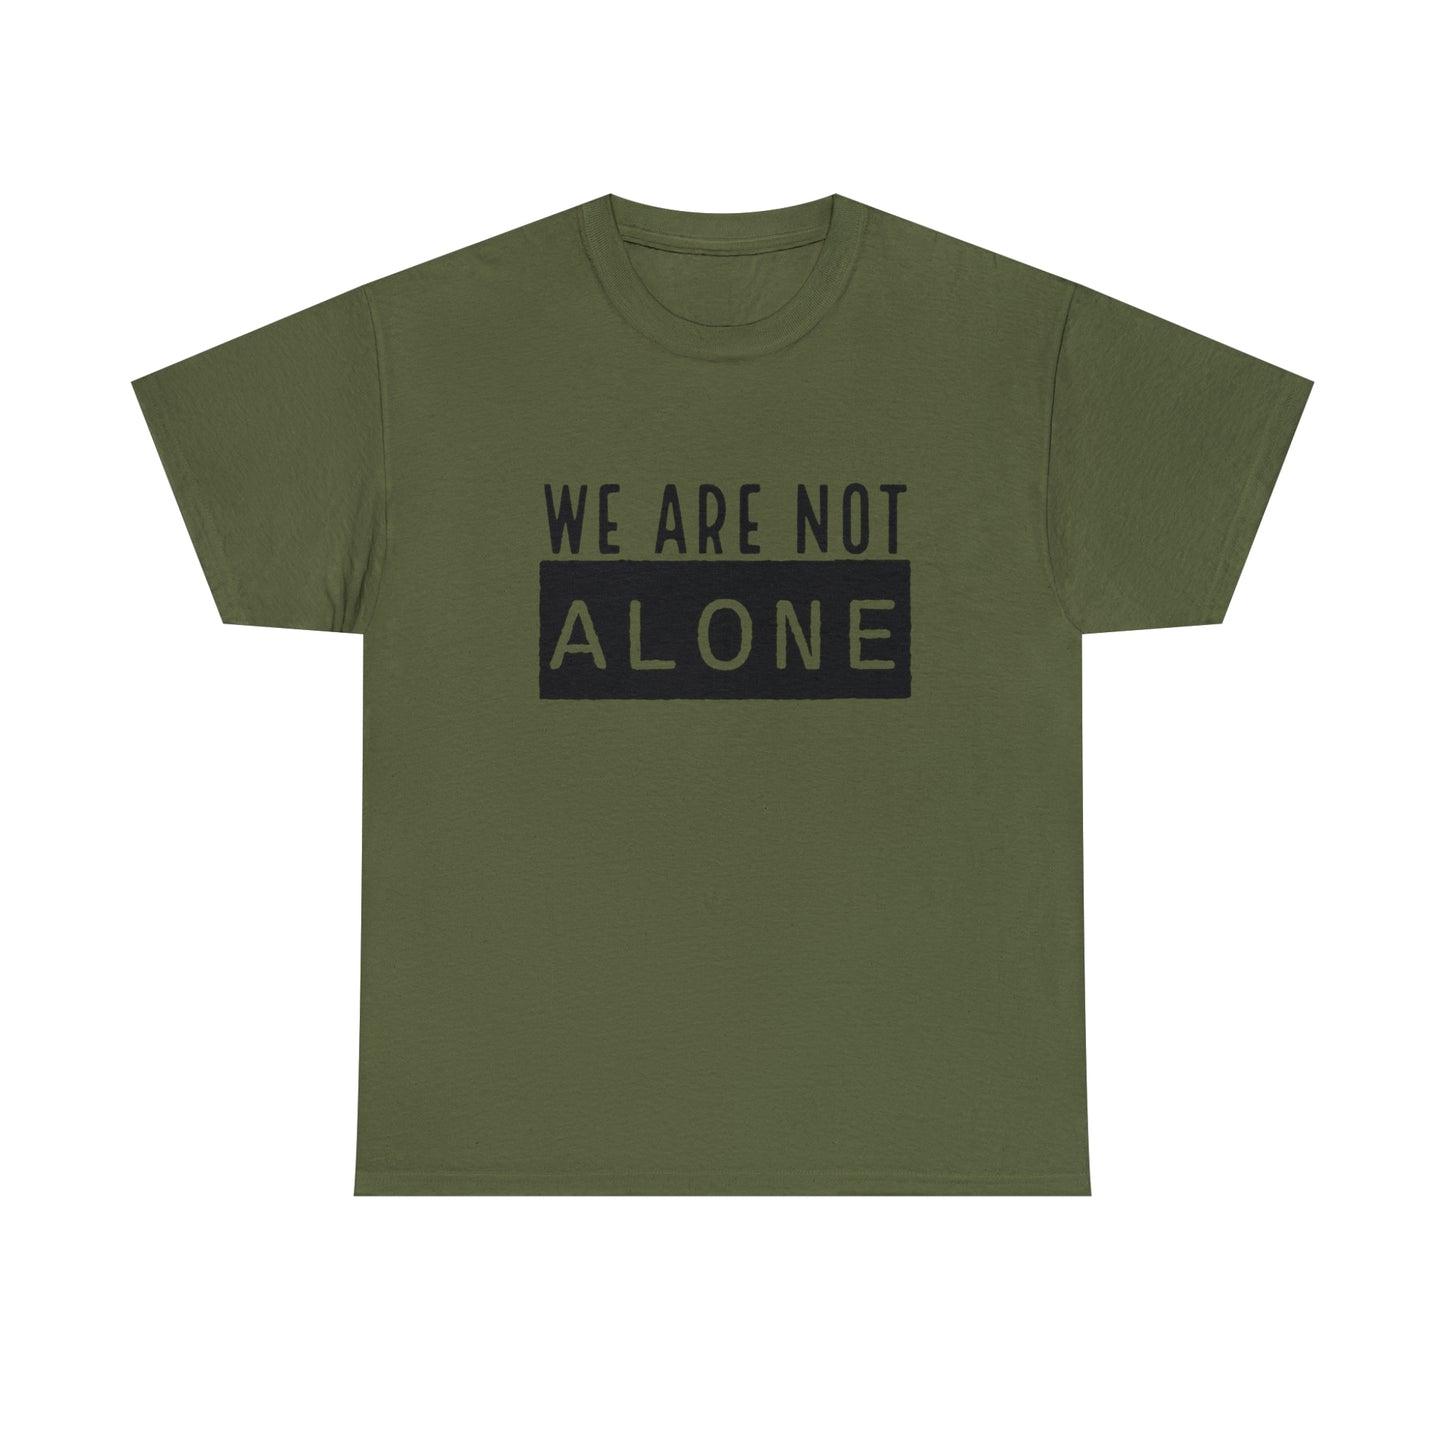 Alien T-Shirt For Not Alone T Shirt For Alien Abduction T Shirt For Conspiracy Shirt For Extraterrestrial TShirt For Outer Space Shirt For Funny Alien Gift